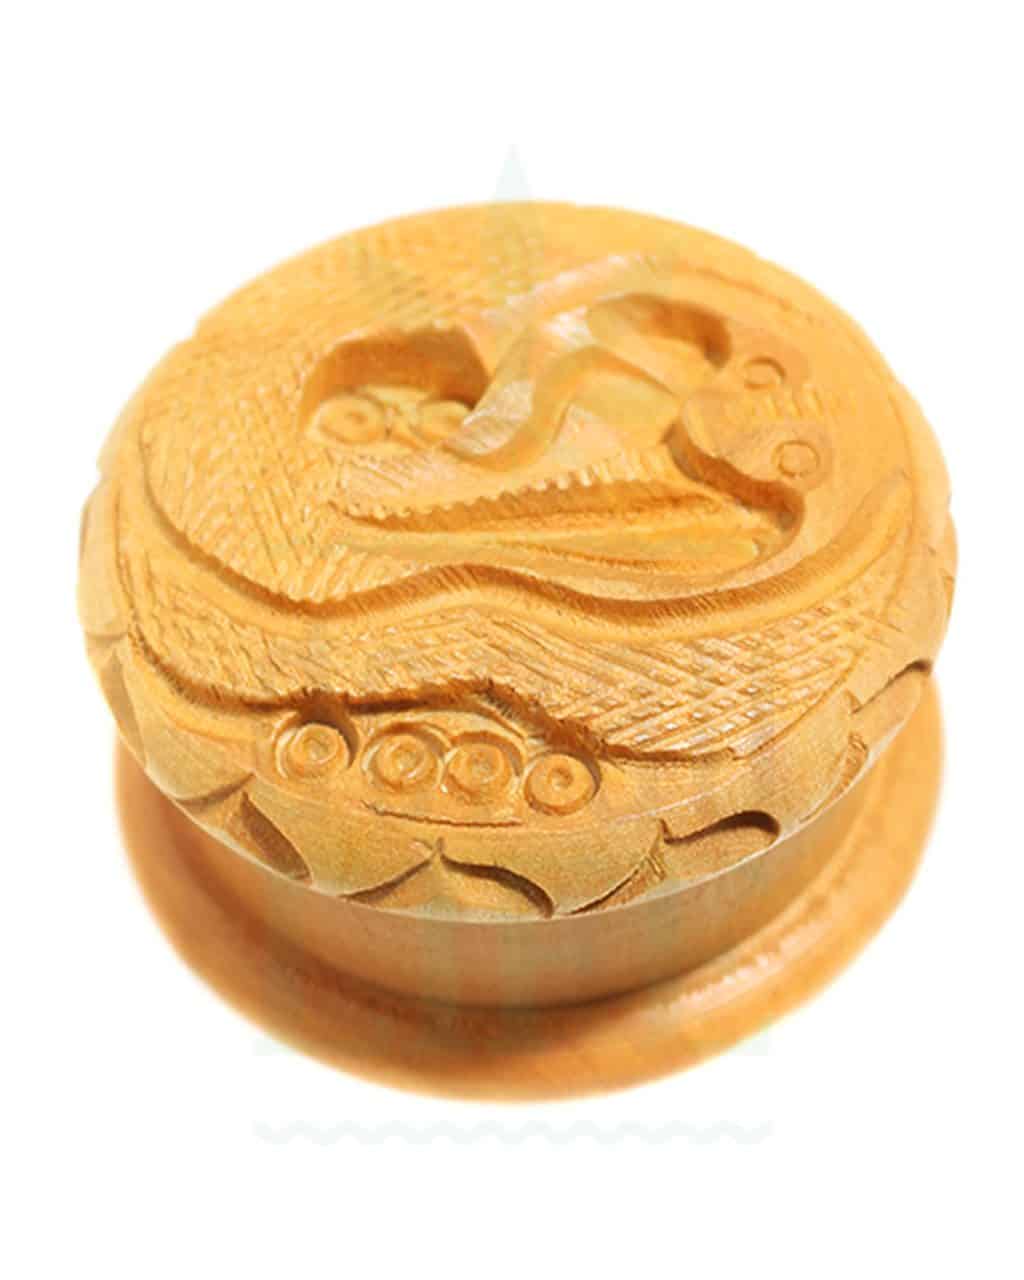 Grinder Grinder aus Shishamholz ‘Kobra’ 2-teilig | Ø 55 mm